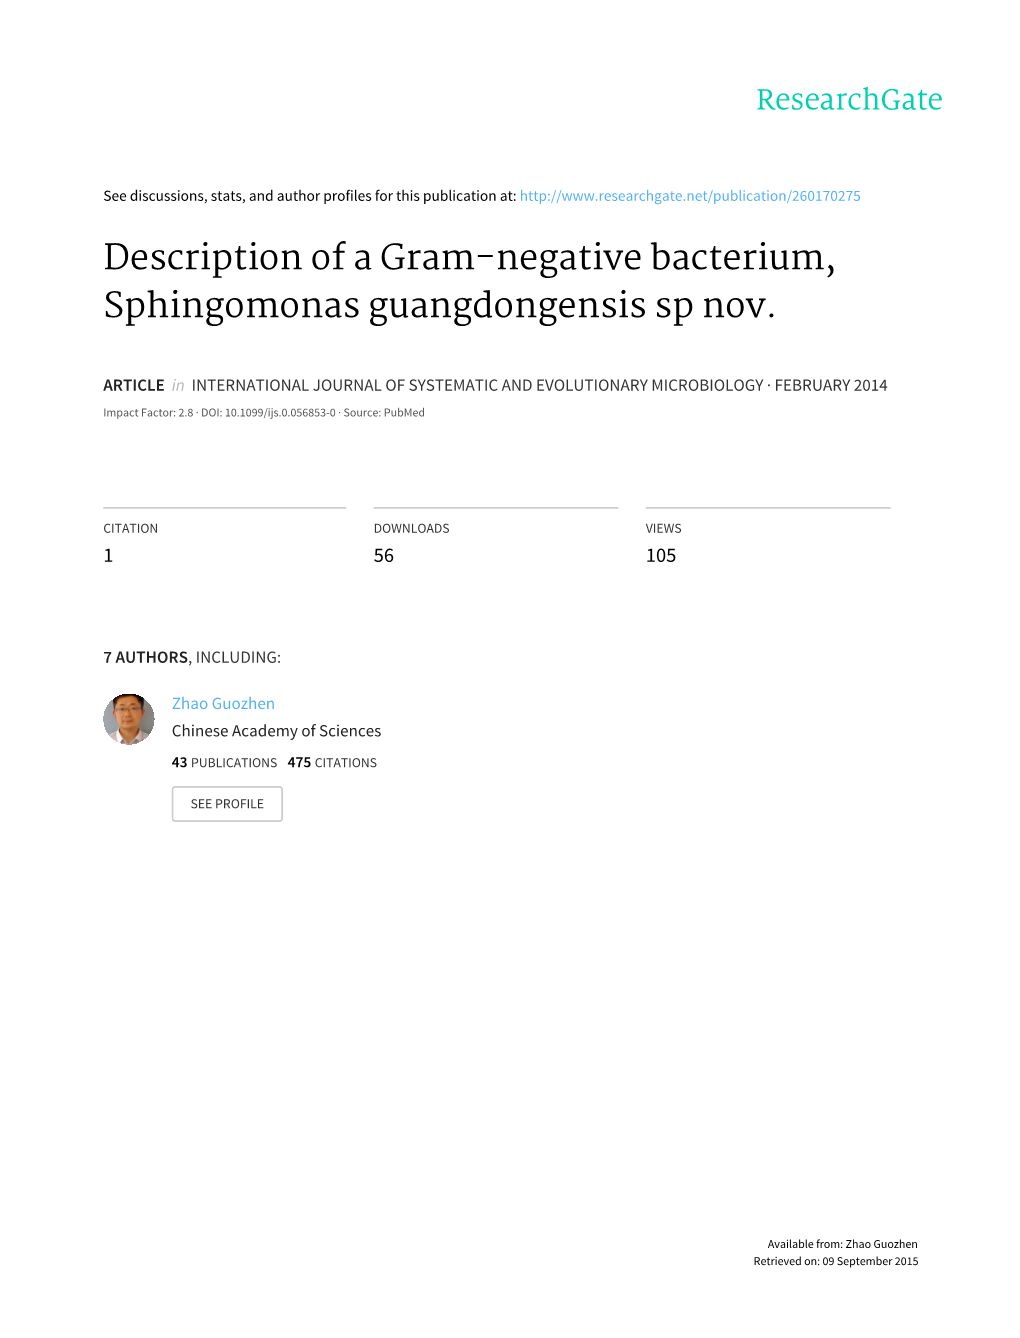 Description of a Gram-Negative Bacterium, Sphingomonas Guangdongensis Sp Nov